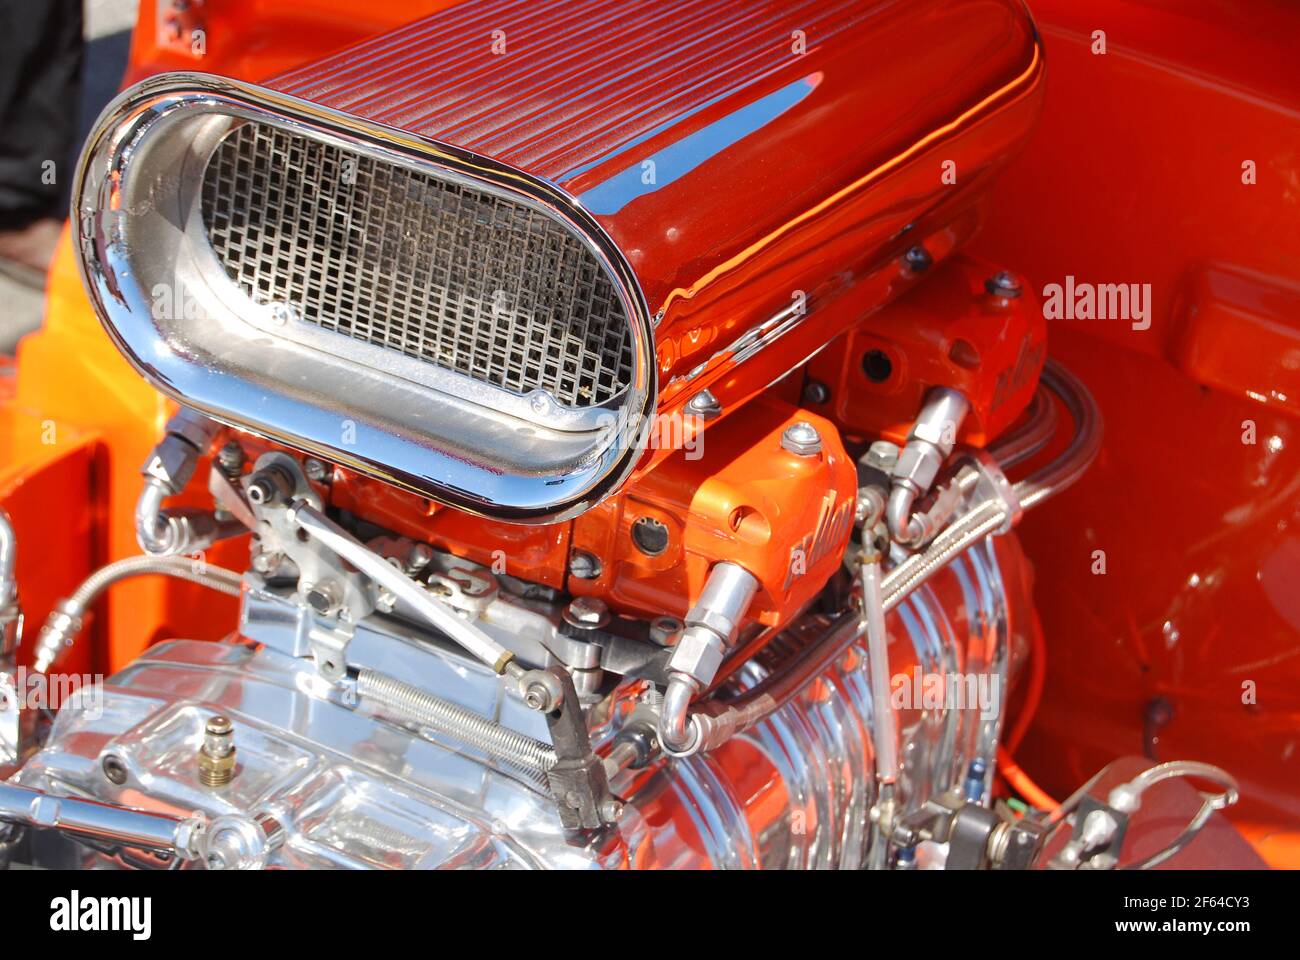 1939 Ford Custom Coupe Hot Rod engine Stock Photo